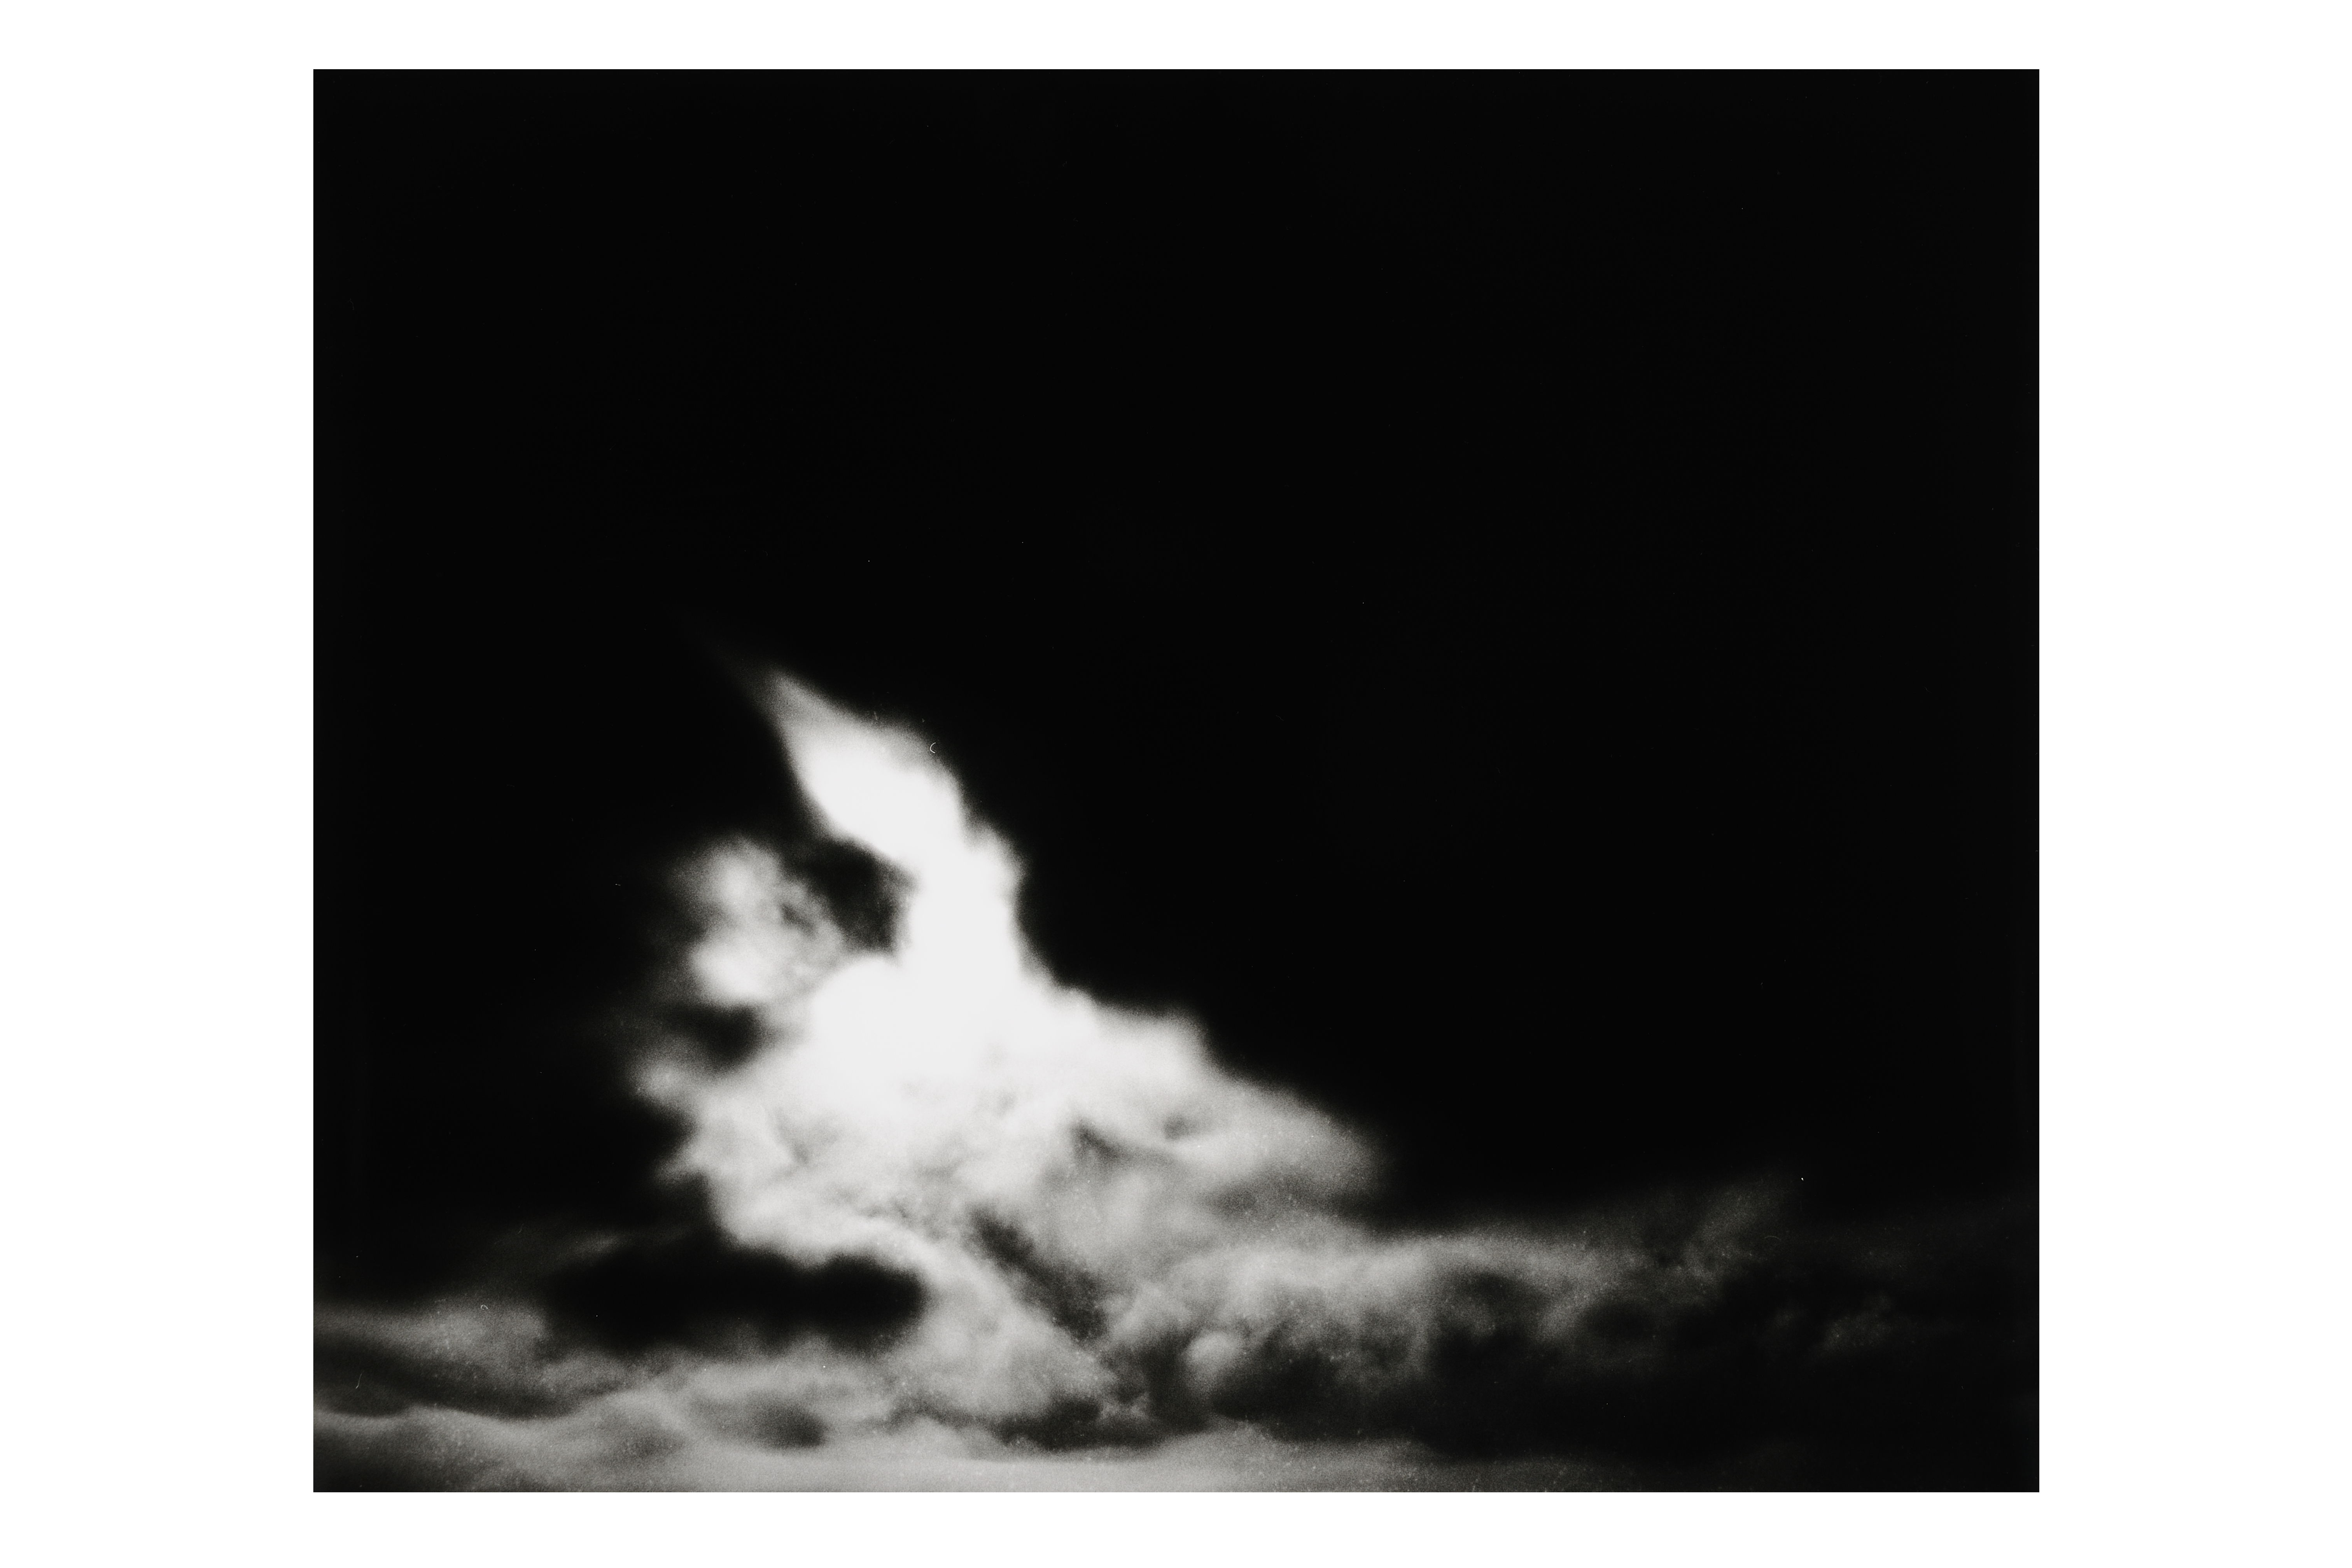 Agop Kanledjian. “Dreamlife in the dark I,” 2015. Silver gelatin archival print, 50 x 60 cm. Courtesy of the artist.